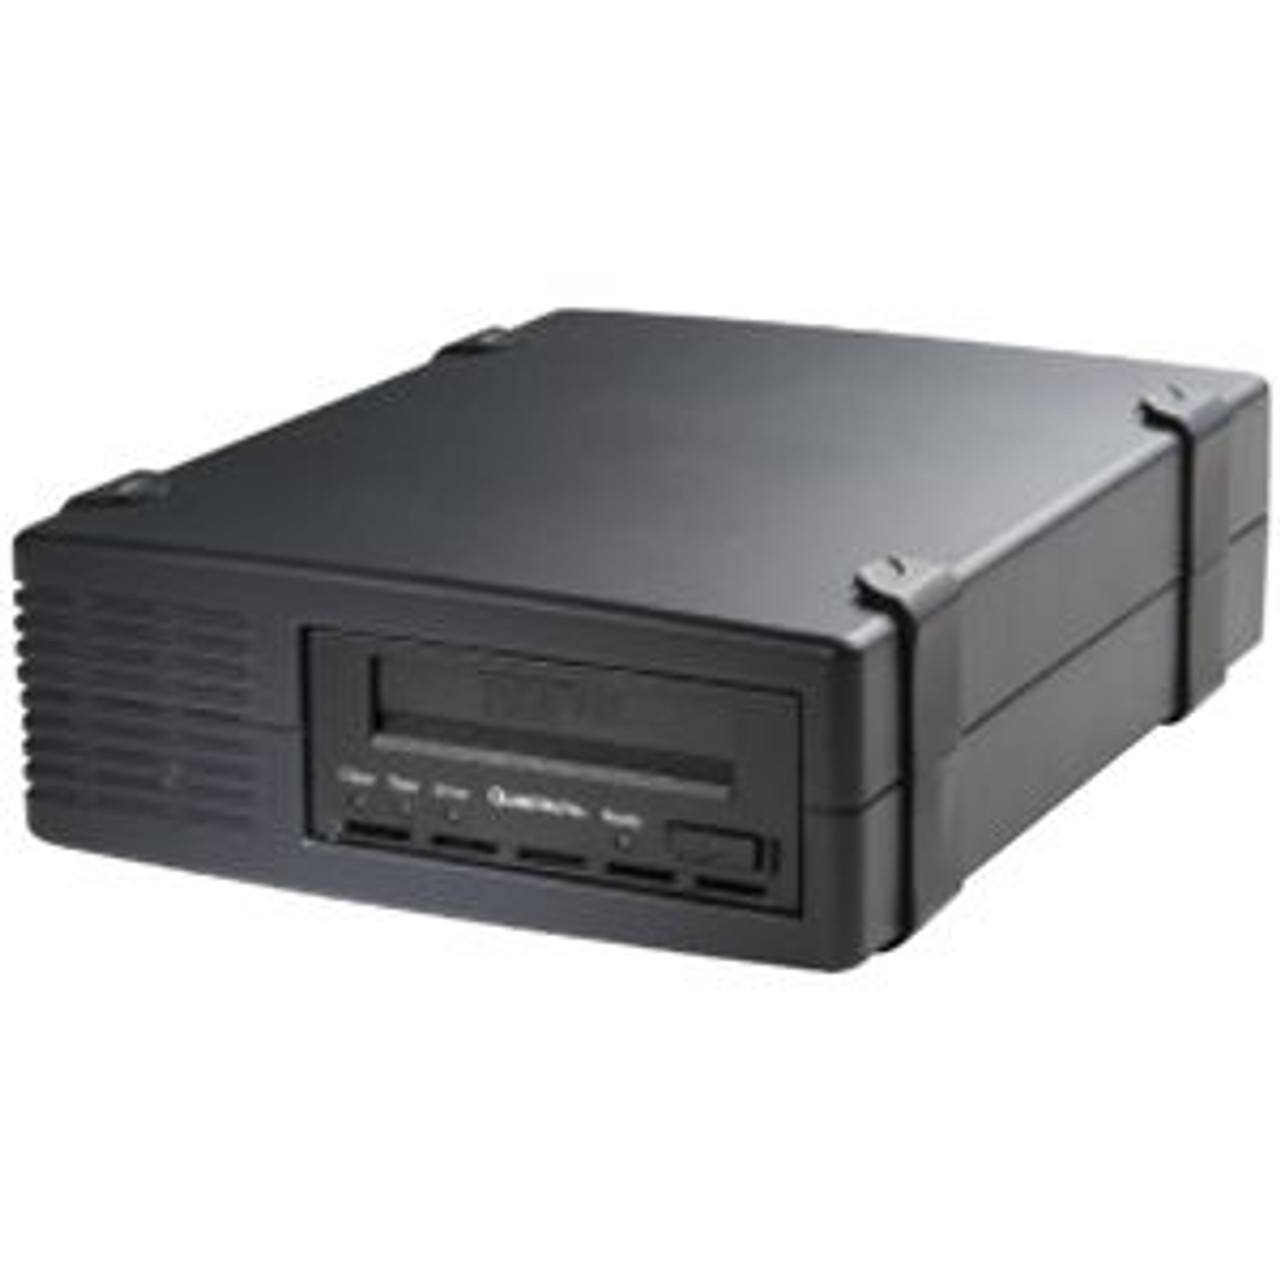 CD160UE-SST - Quantum CD160UE-SST DAT 160 Tape Drive - 80GB (Native)/160GB (Compressed) - 1/2H Desktop